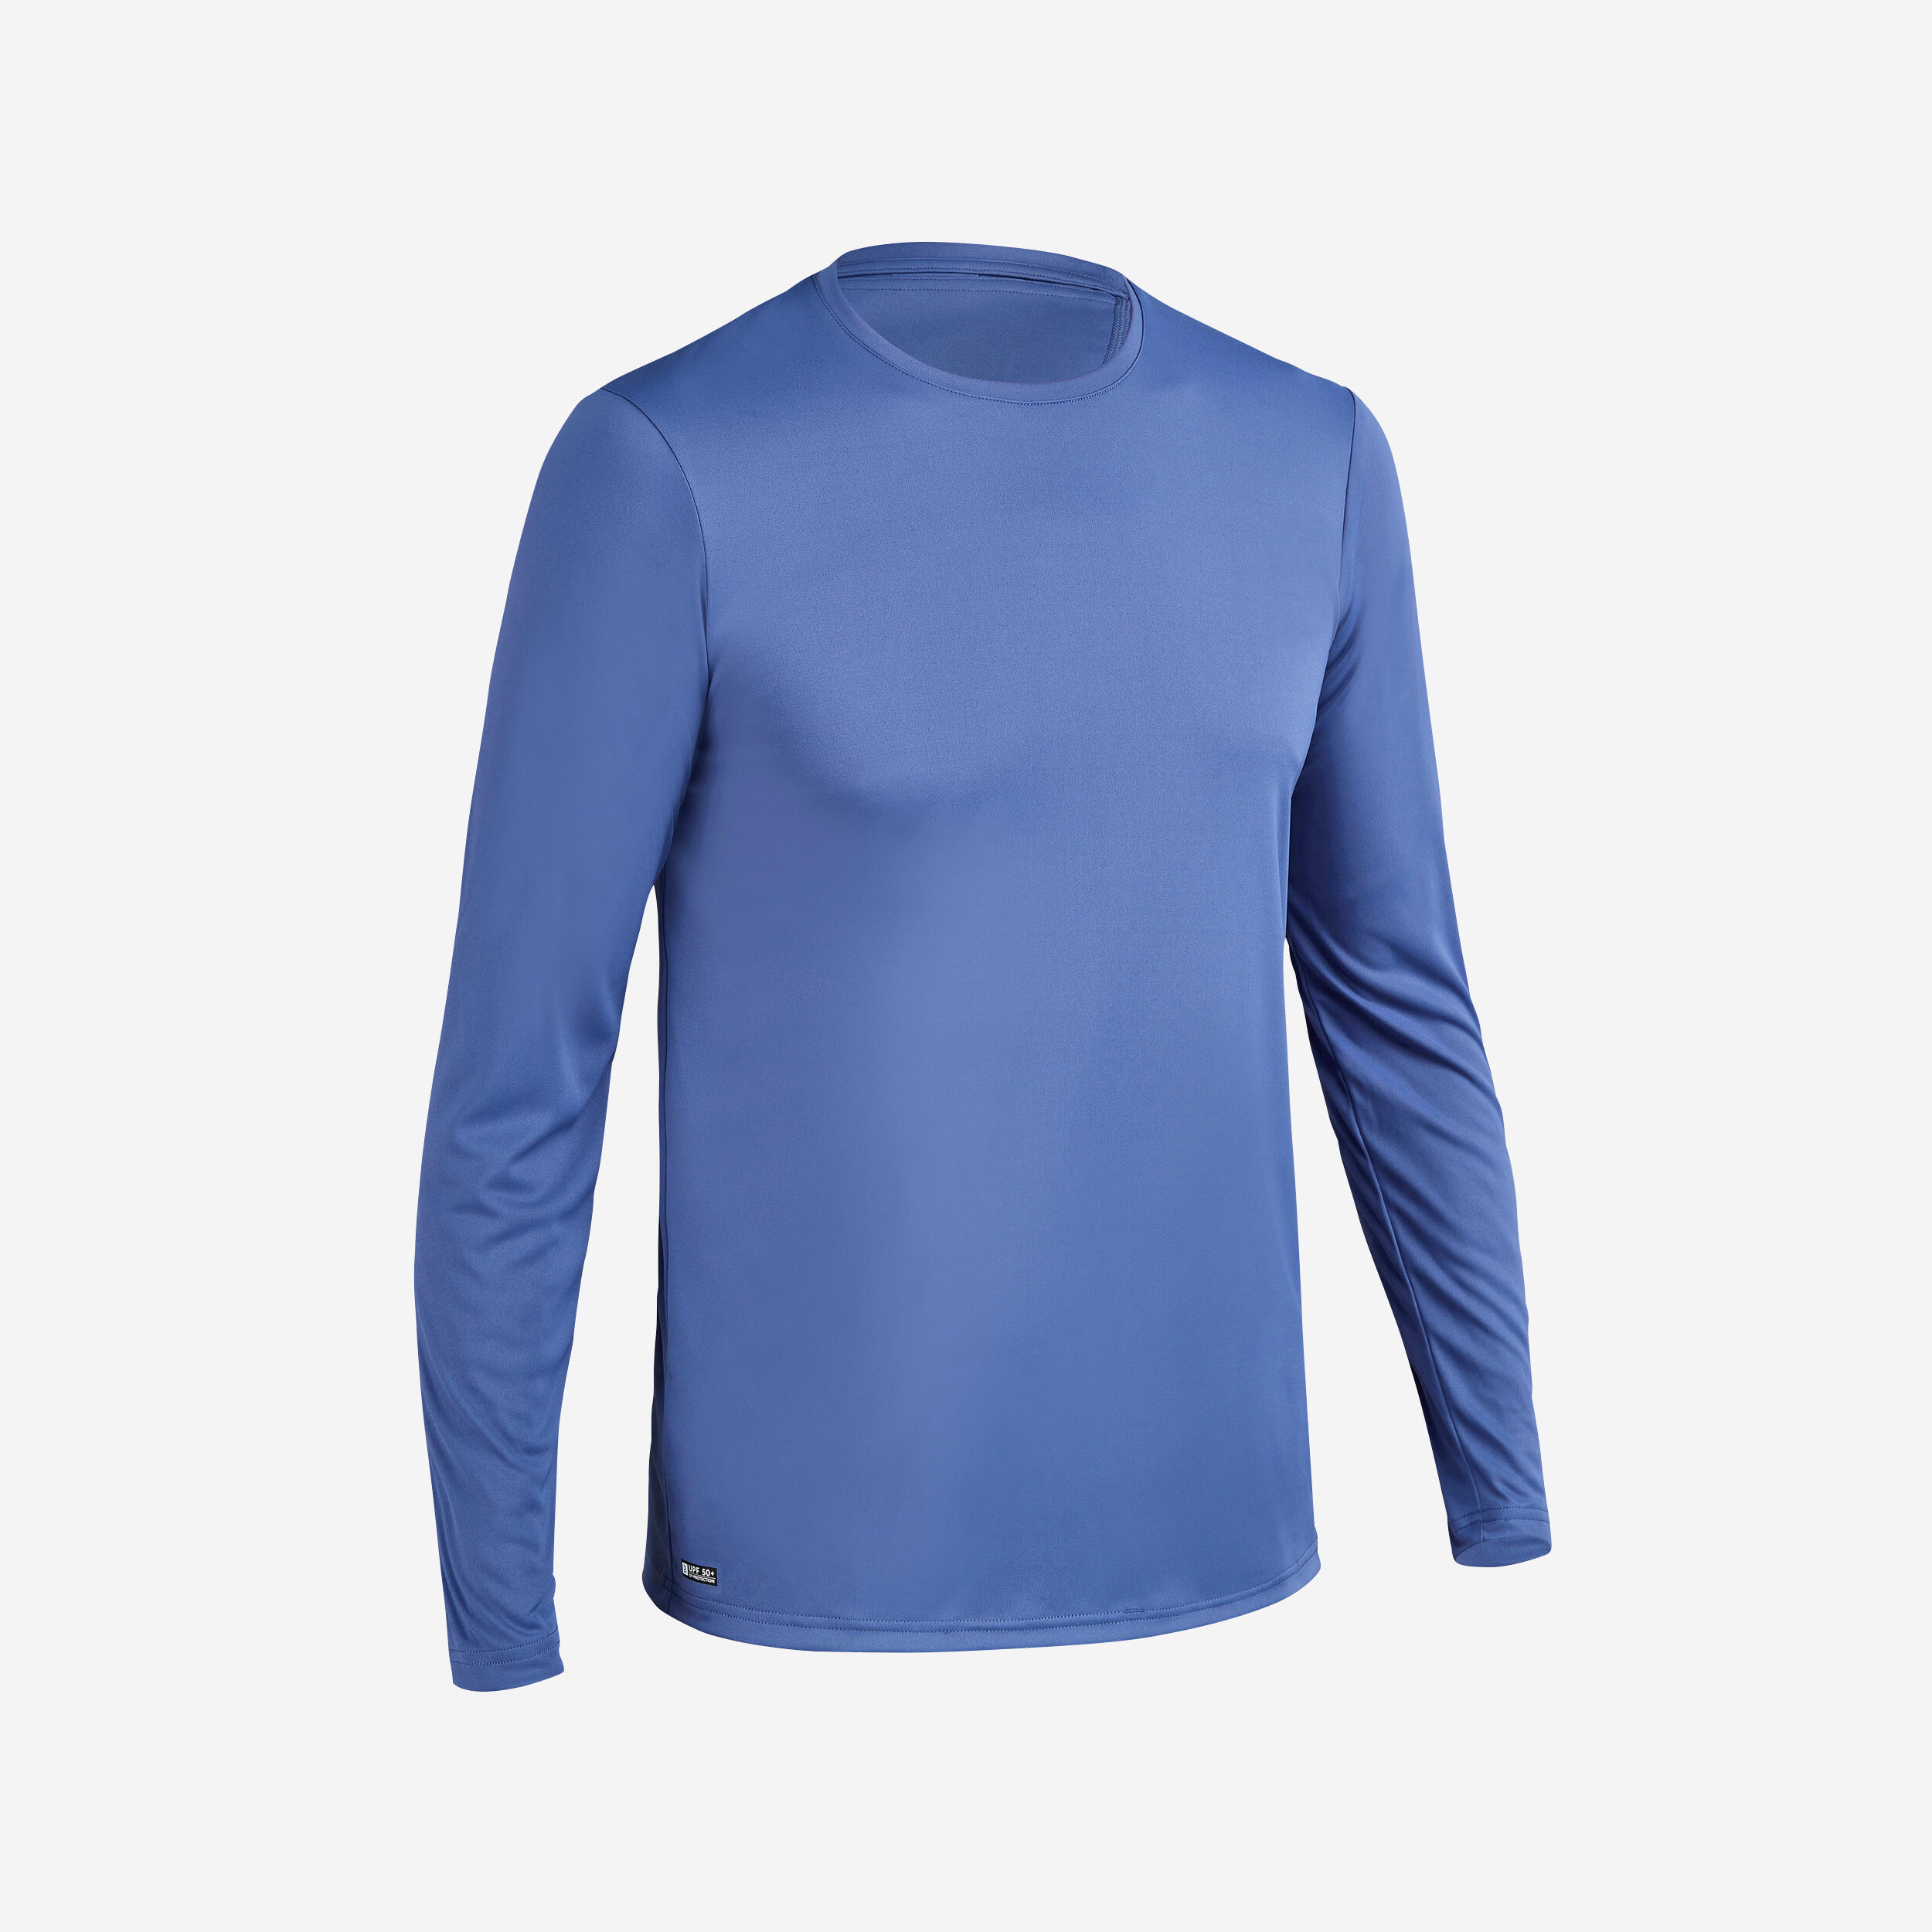 https://contents.mediadecathlon.com/p2408467/k$6a1fde623258fd2159a33a6d388b4f07/men-s-surfing-water-t-shirt-long-sleeve-uv-protection-top-blue-olaian-8787799.jpg